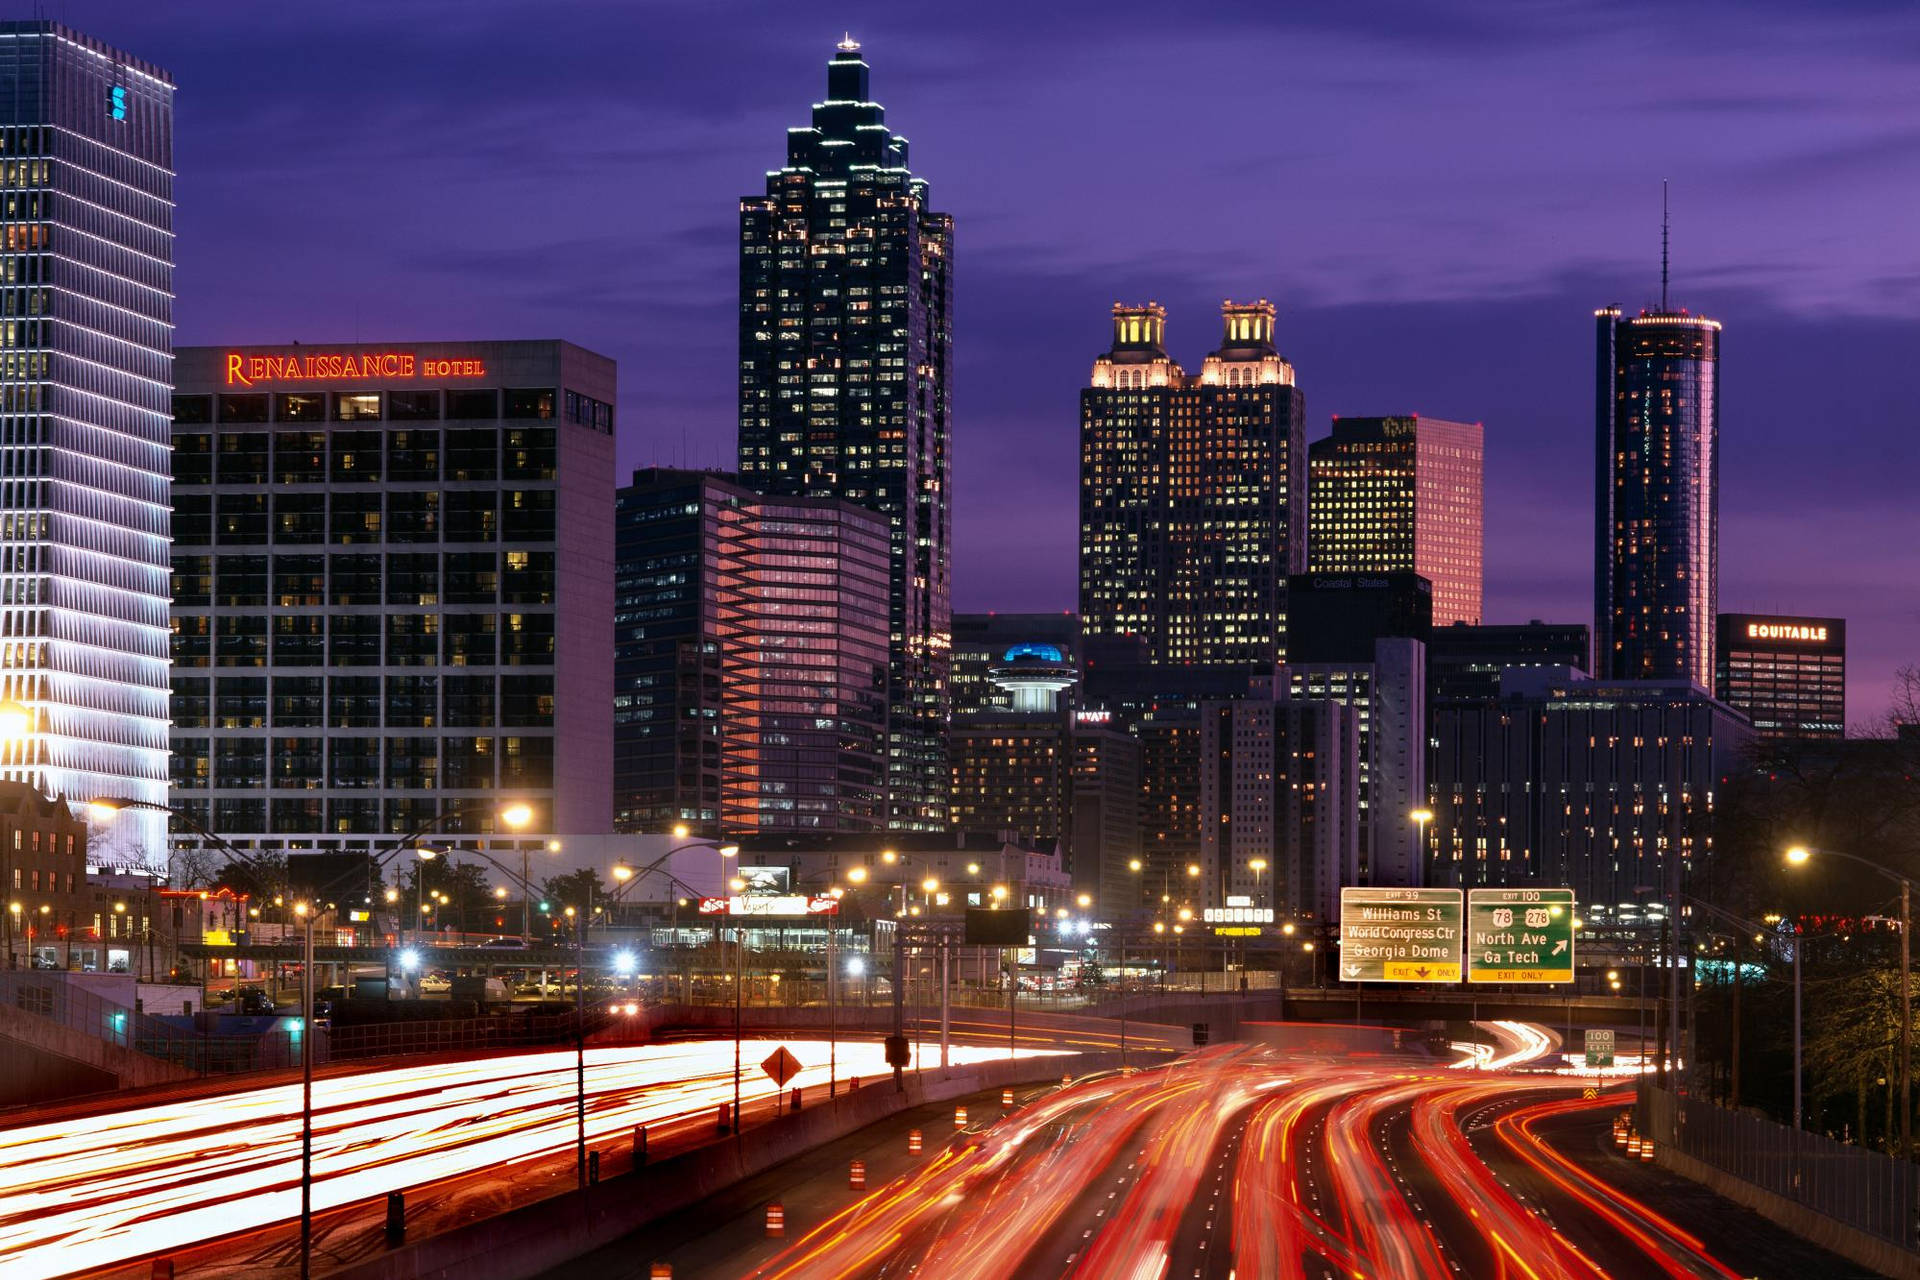 Aesthetic Image Of Atlanta City